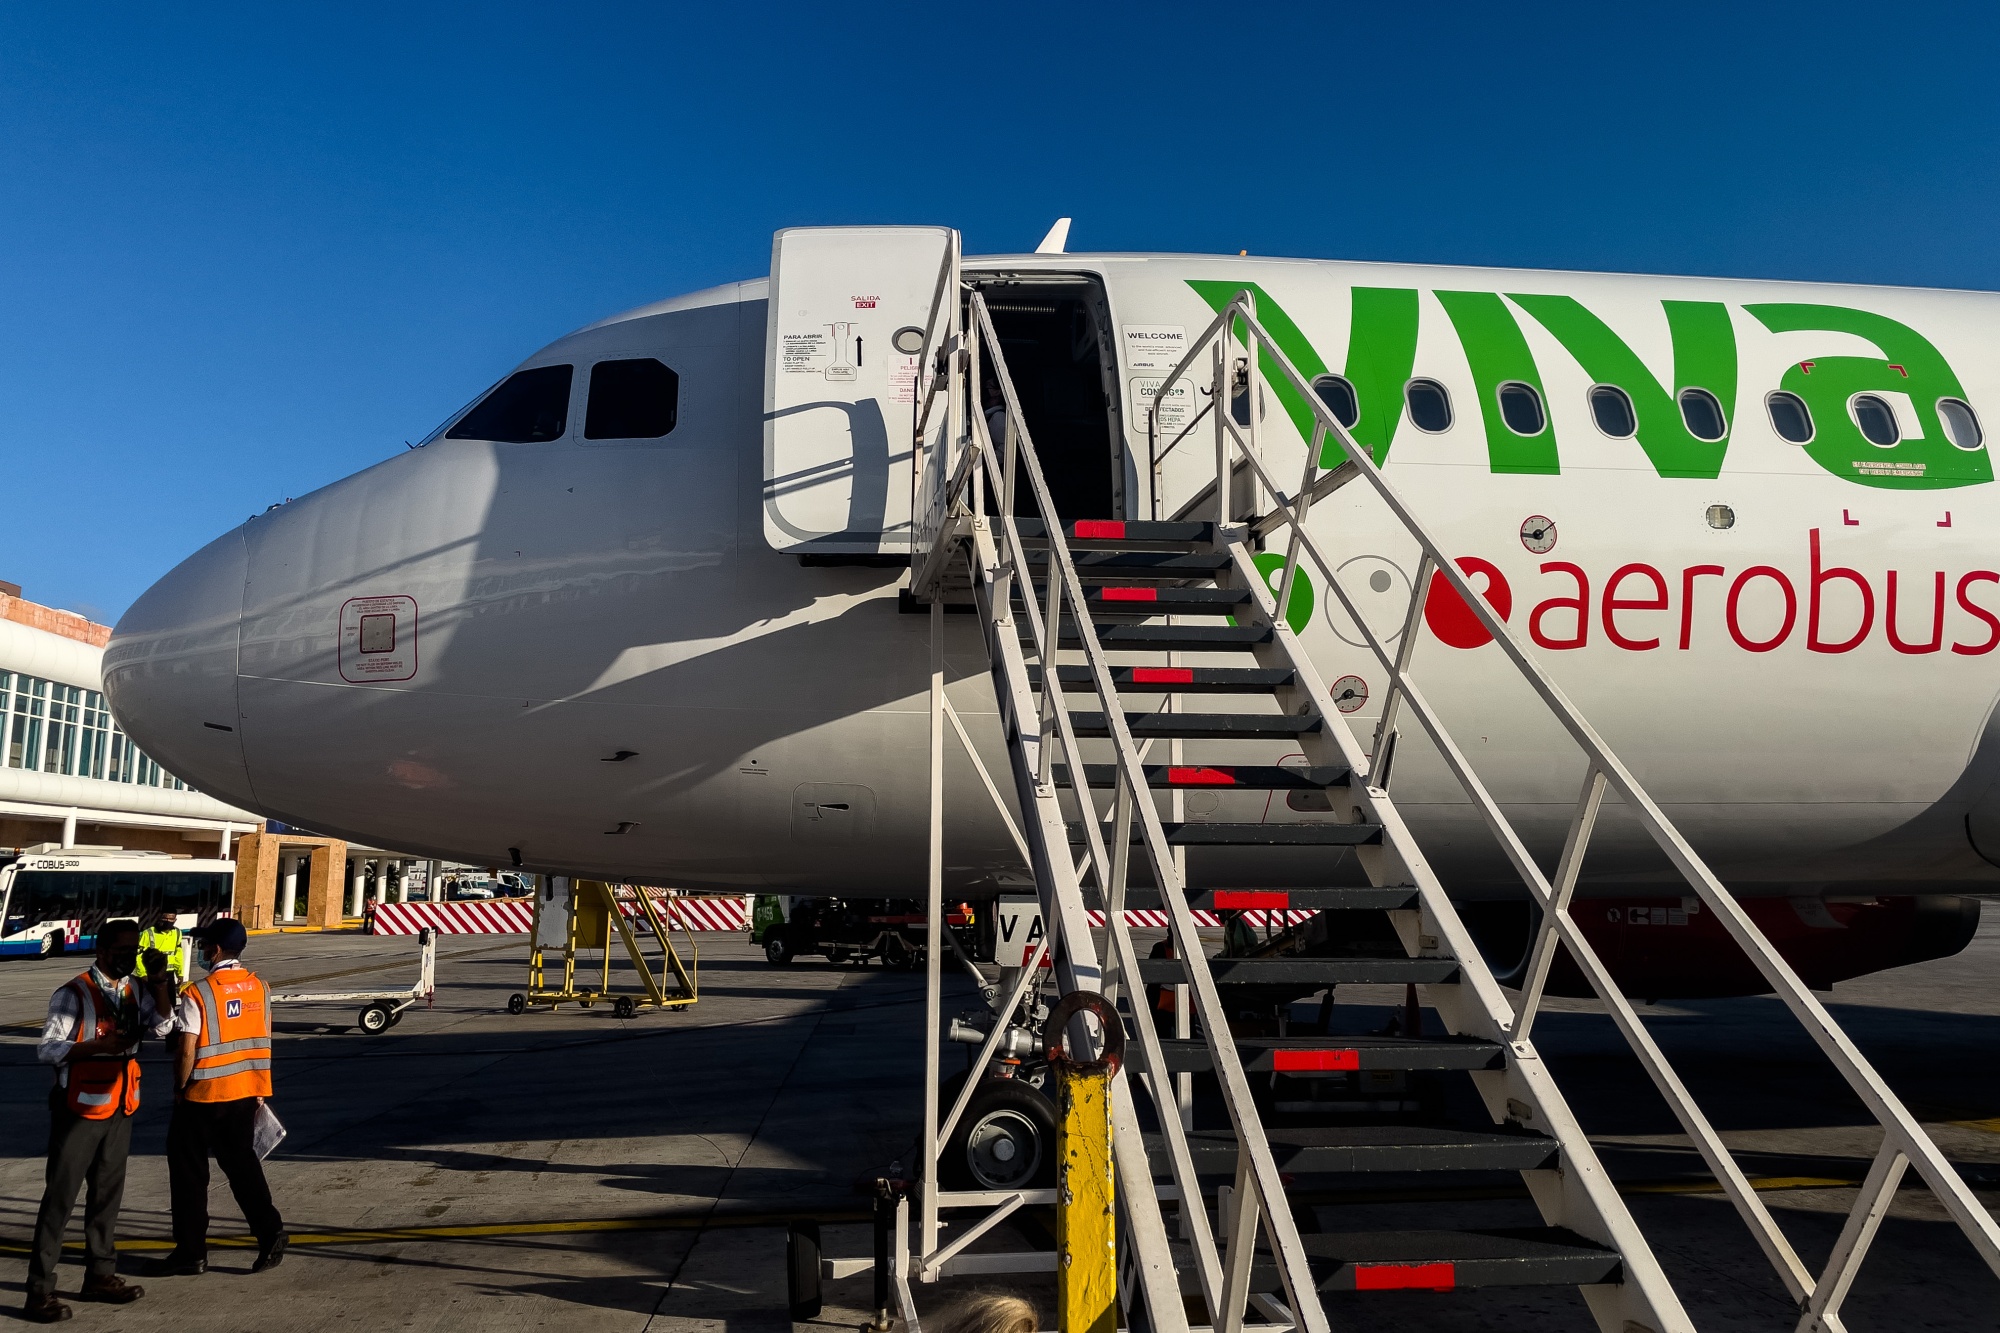 Flight review: Viva Air A320 economy class – Business Traveller